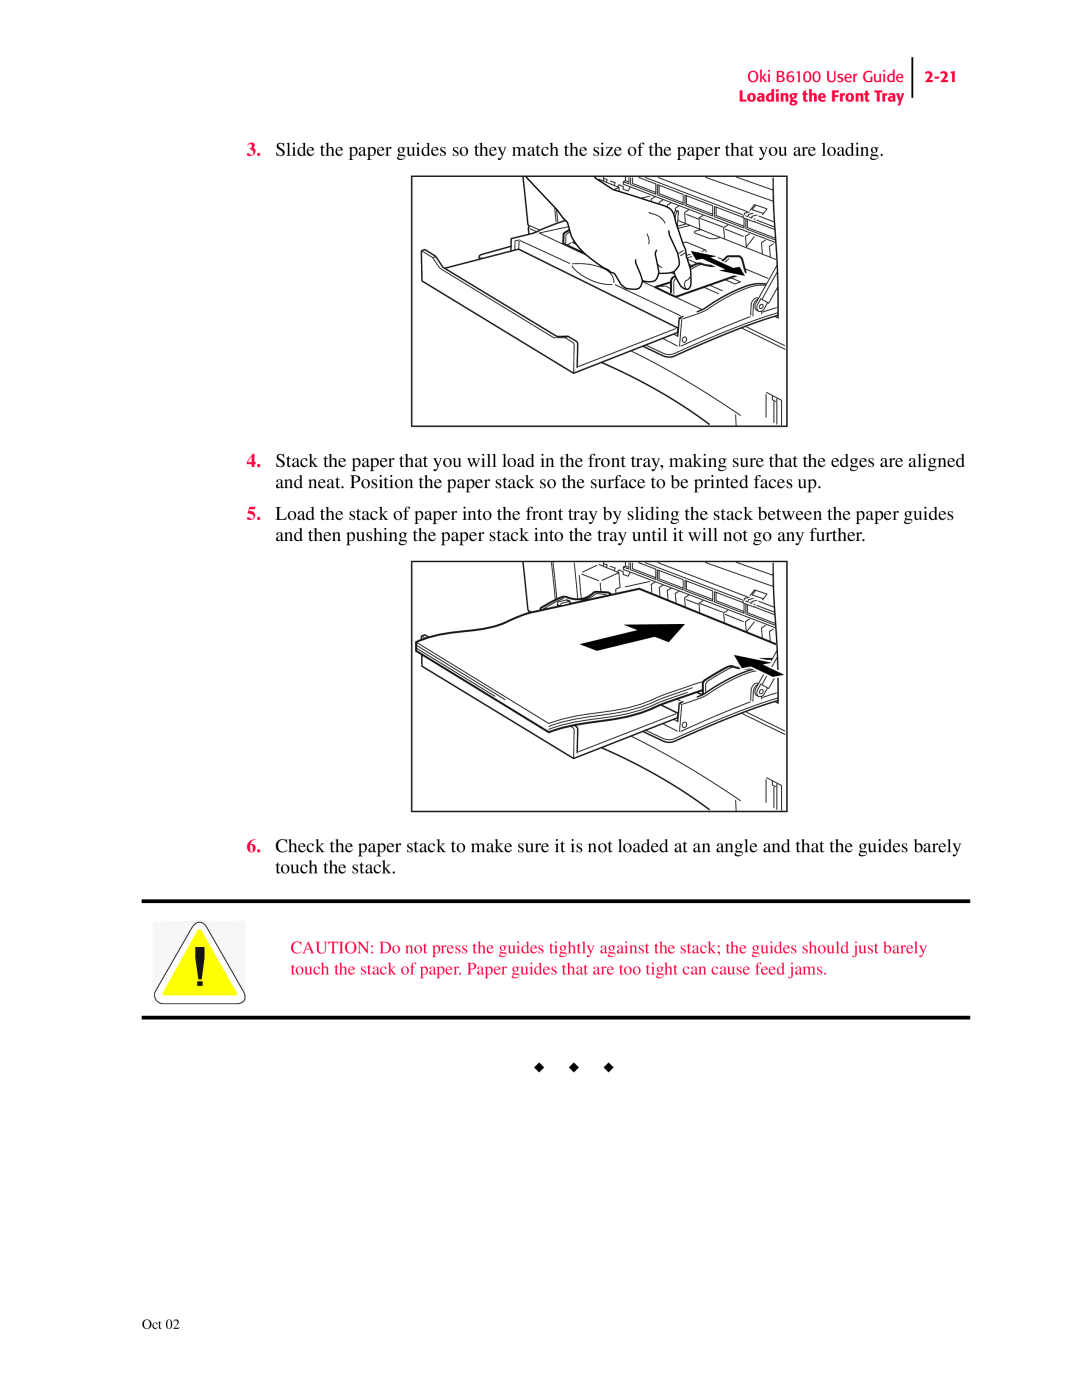 Oki manual Oki B6100 User Guide Loading the Front Tray, 2-21 